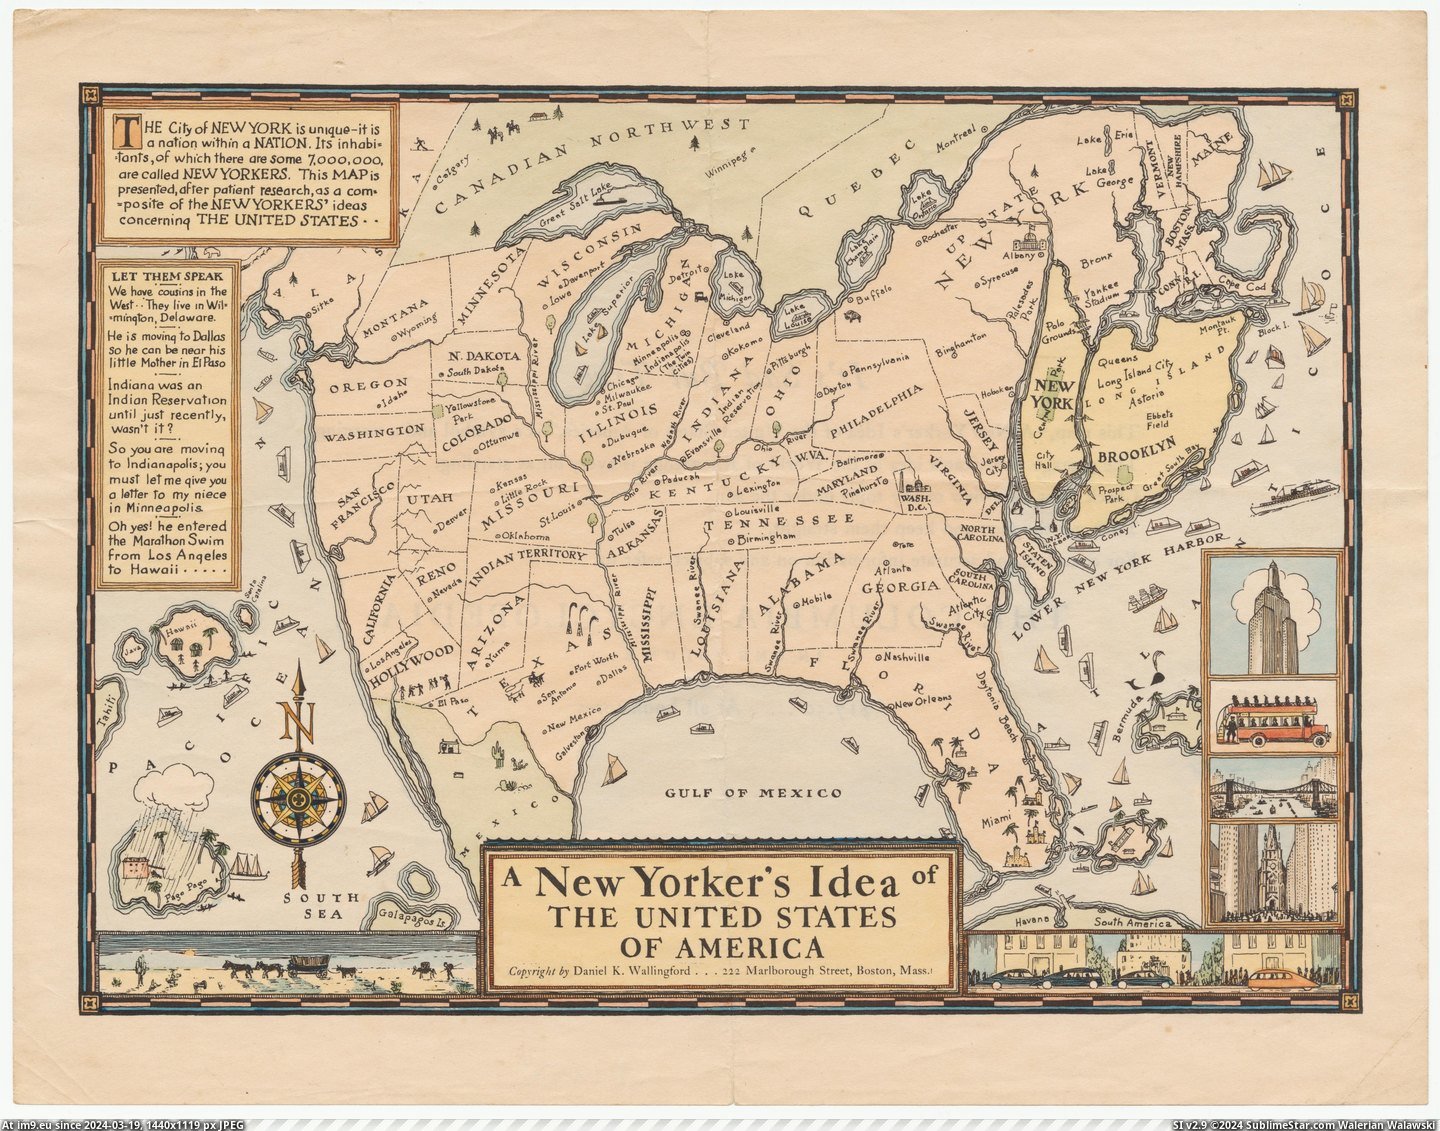 #States #America #Idea #United [Mapporn] A New Yorker's Idea of the United States of America (1936) [6677x5202] Pic. (Obraz z album My r/MAPS favs))